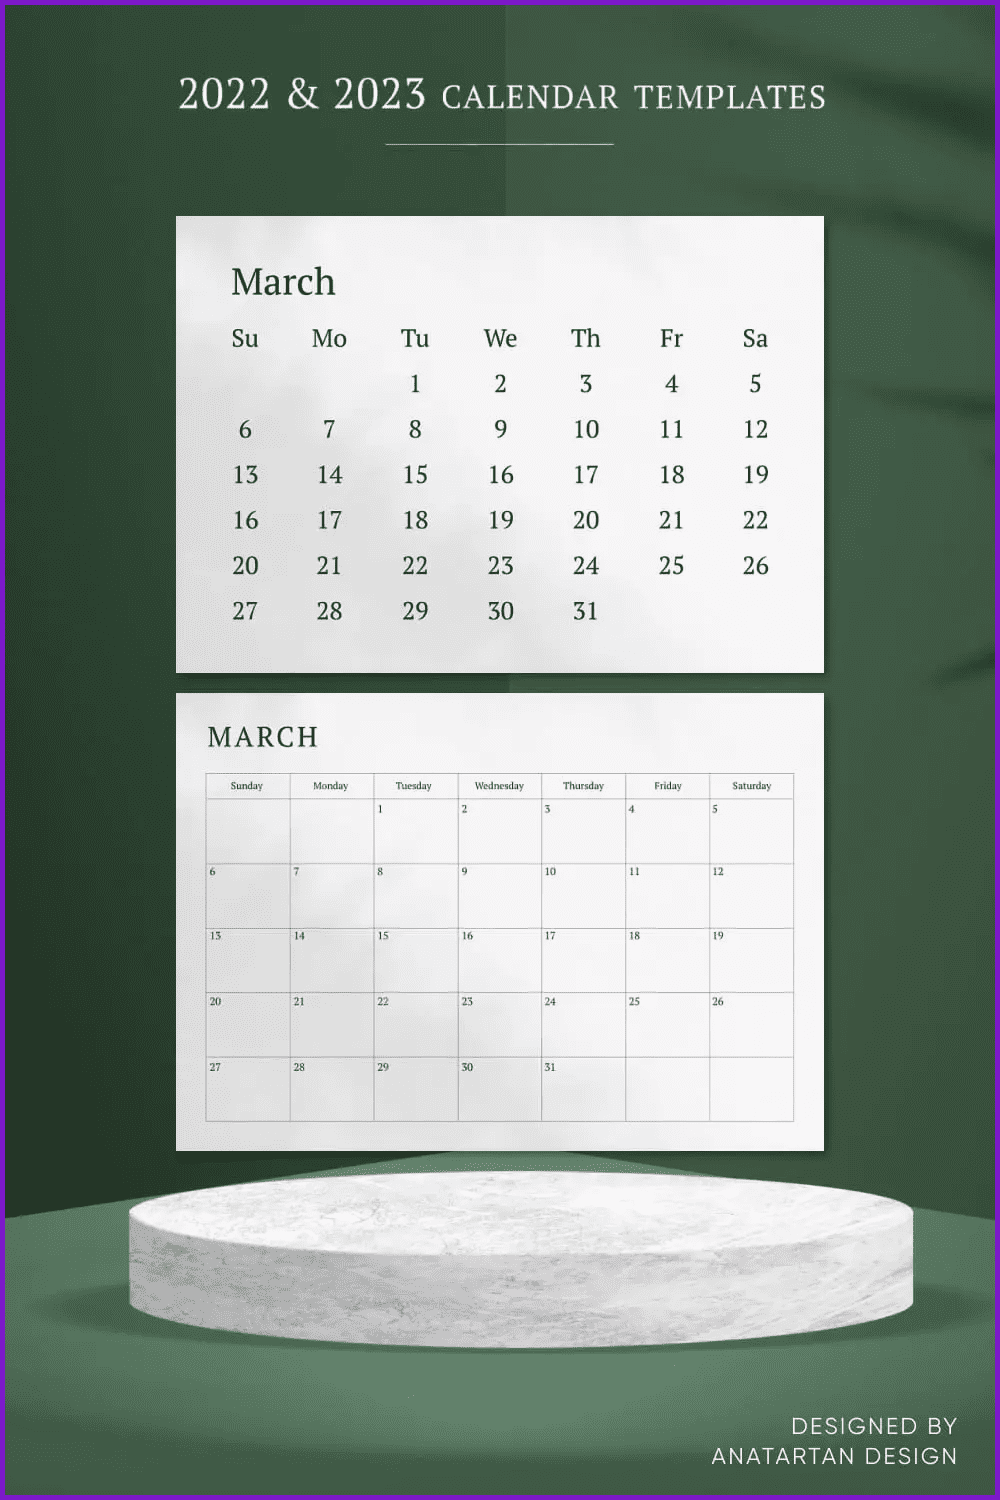 Simple elegant calendar in green color.